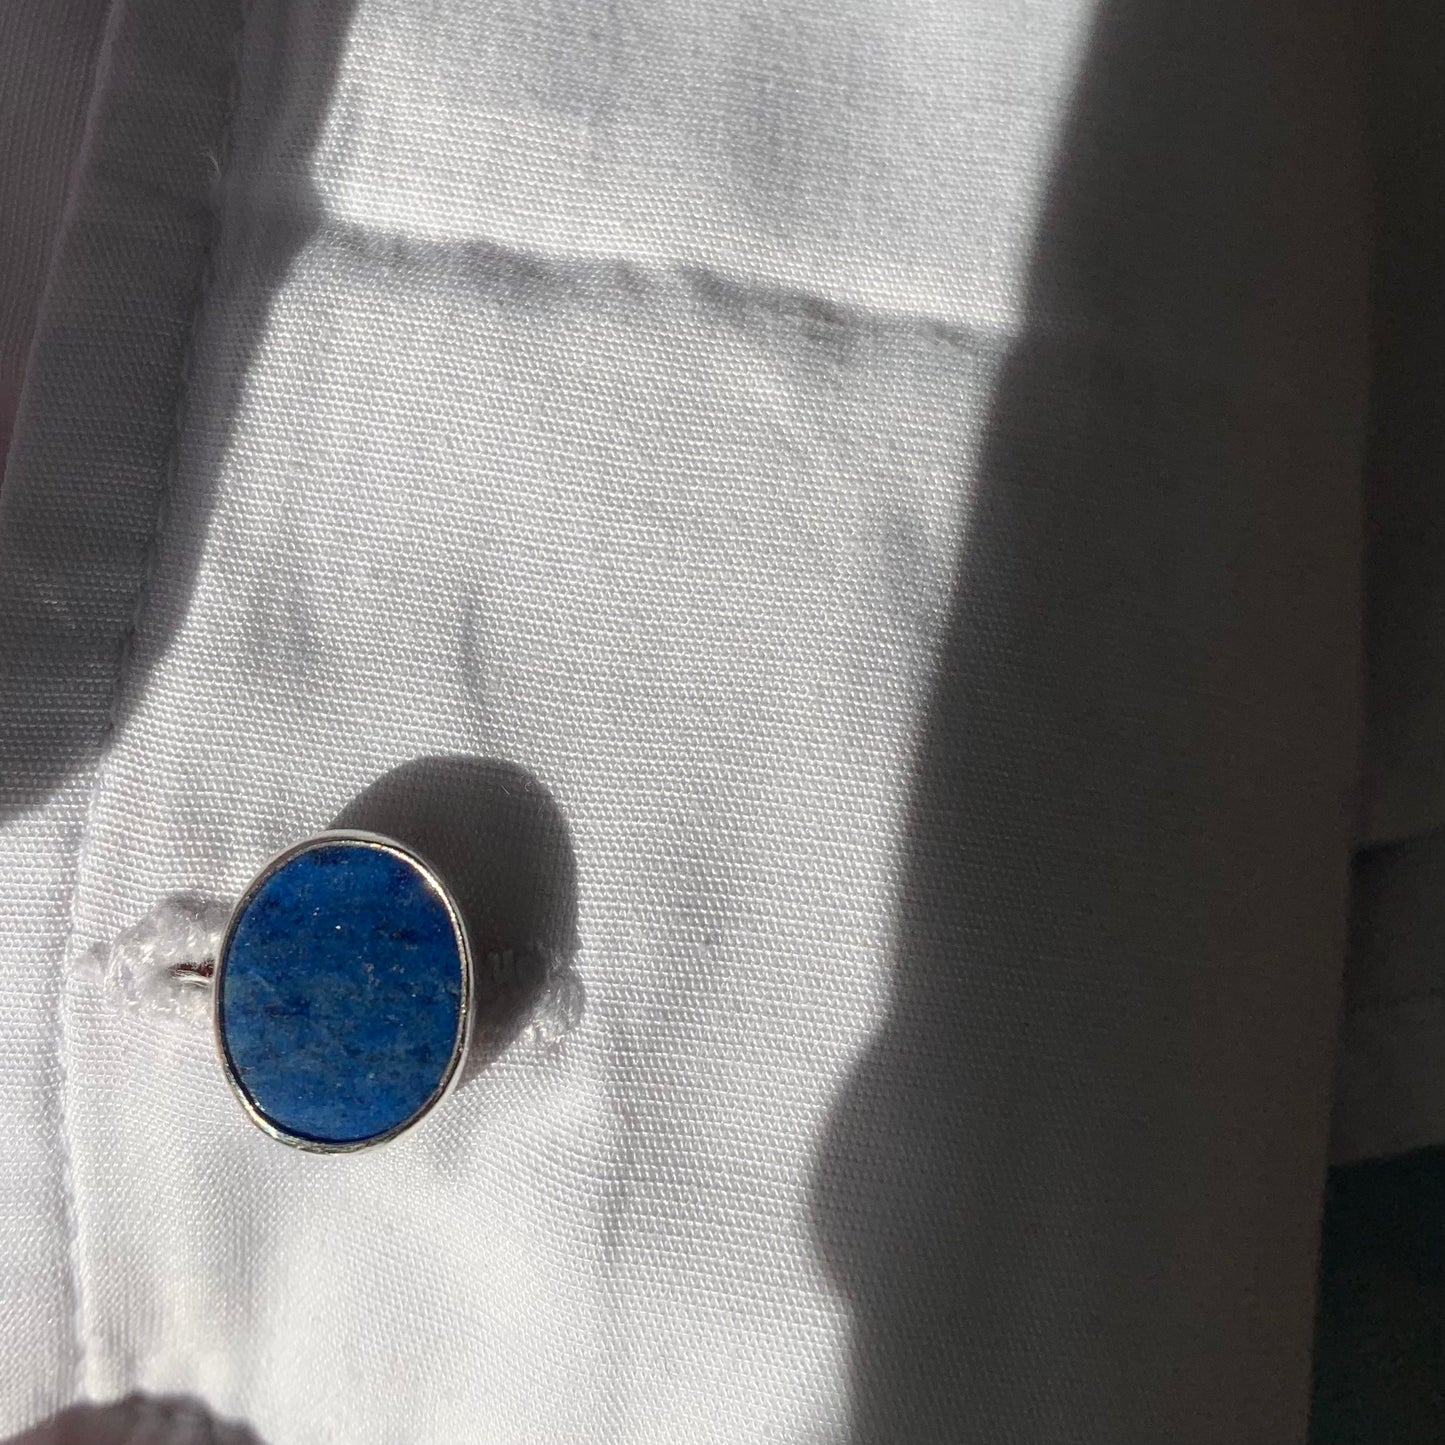 Oval lapis lazuli cufflinks in a white shirt button hole.